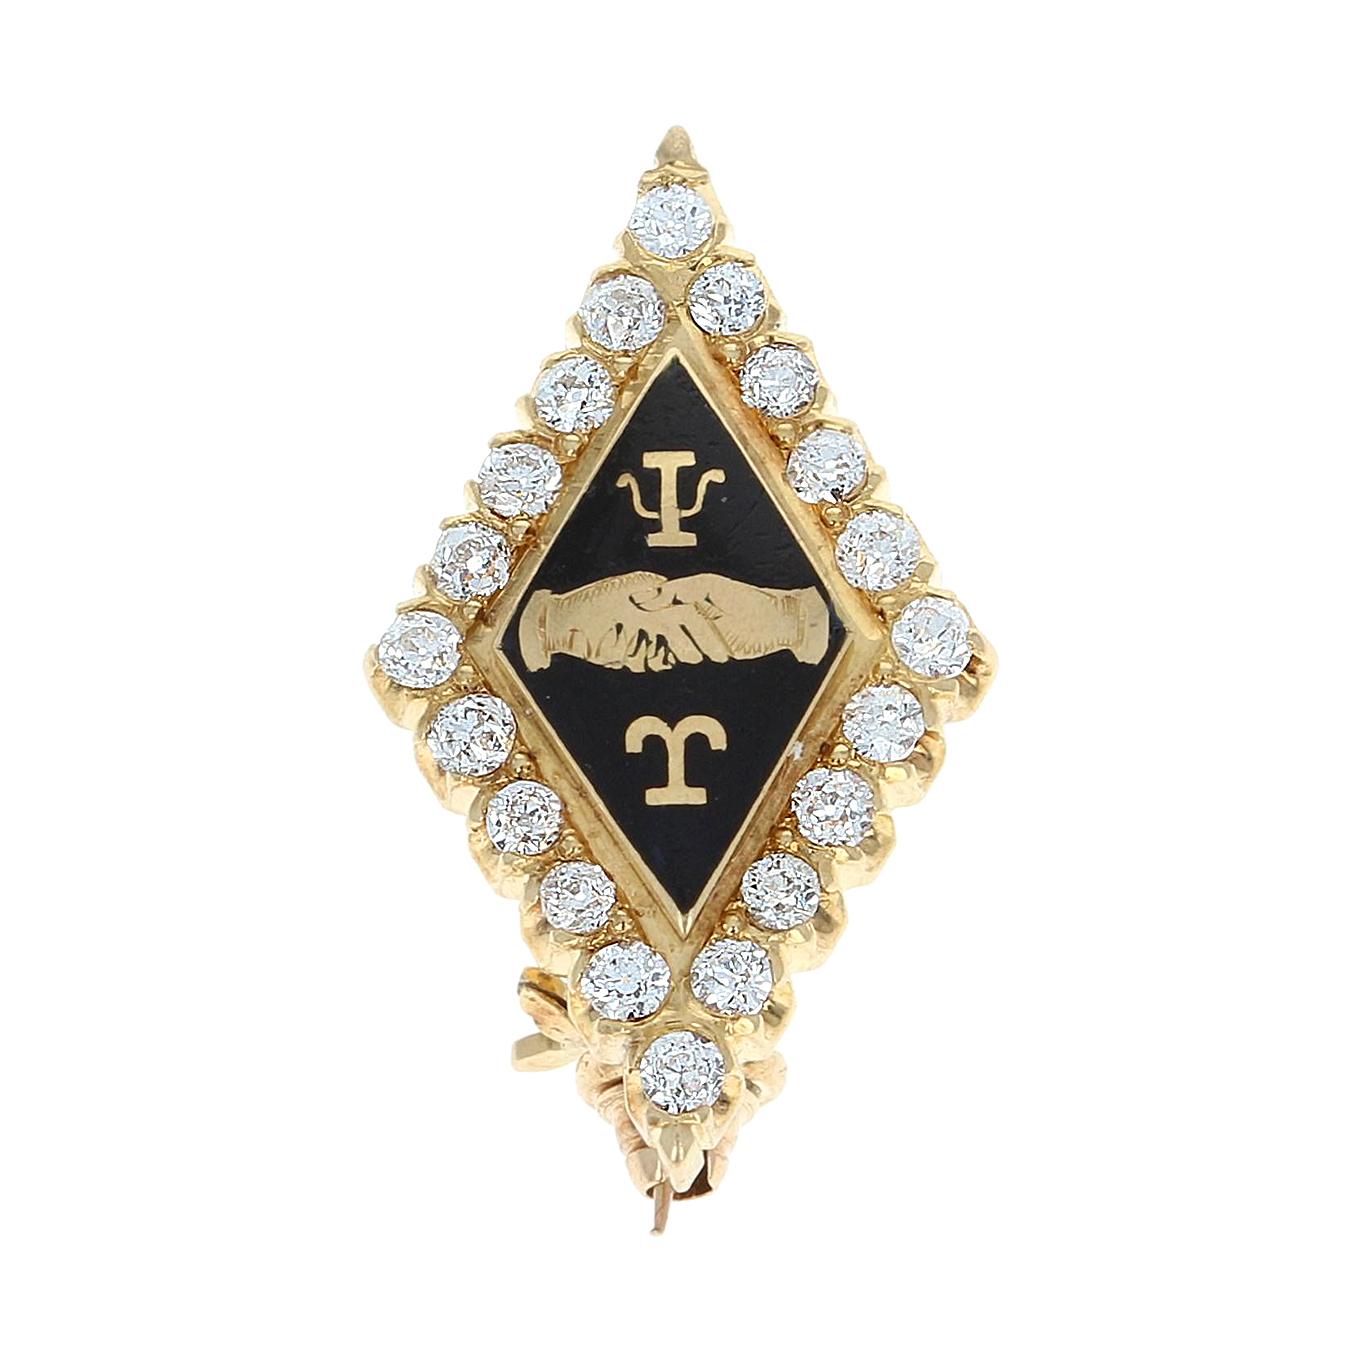 Psi Upsilon Badge, 14 Karat Gold Diamonds 1898 Dartmouth Fraternity Antique Pin For Sale